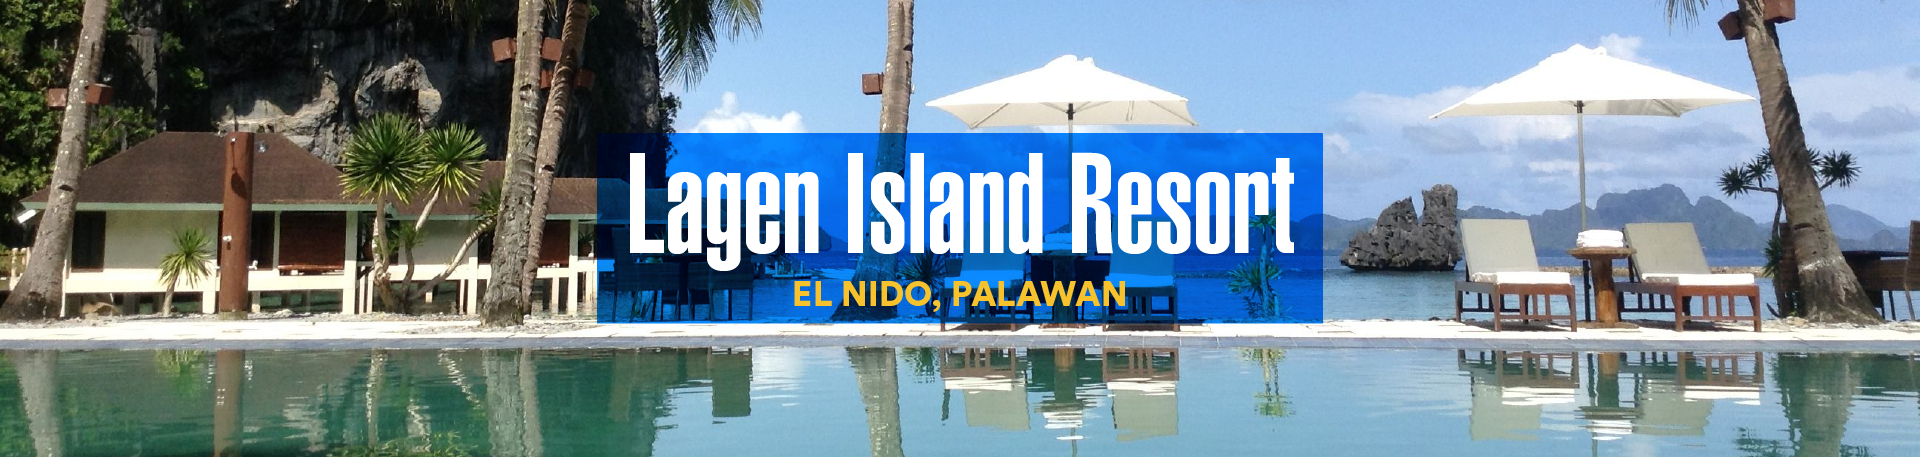 Lagen Island Resort, El Nido, Palawan